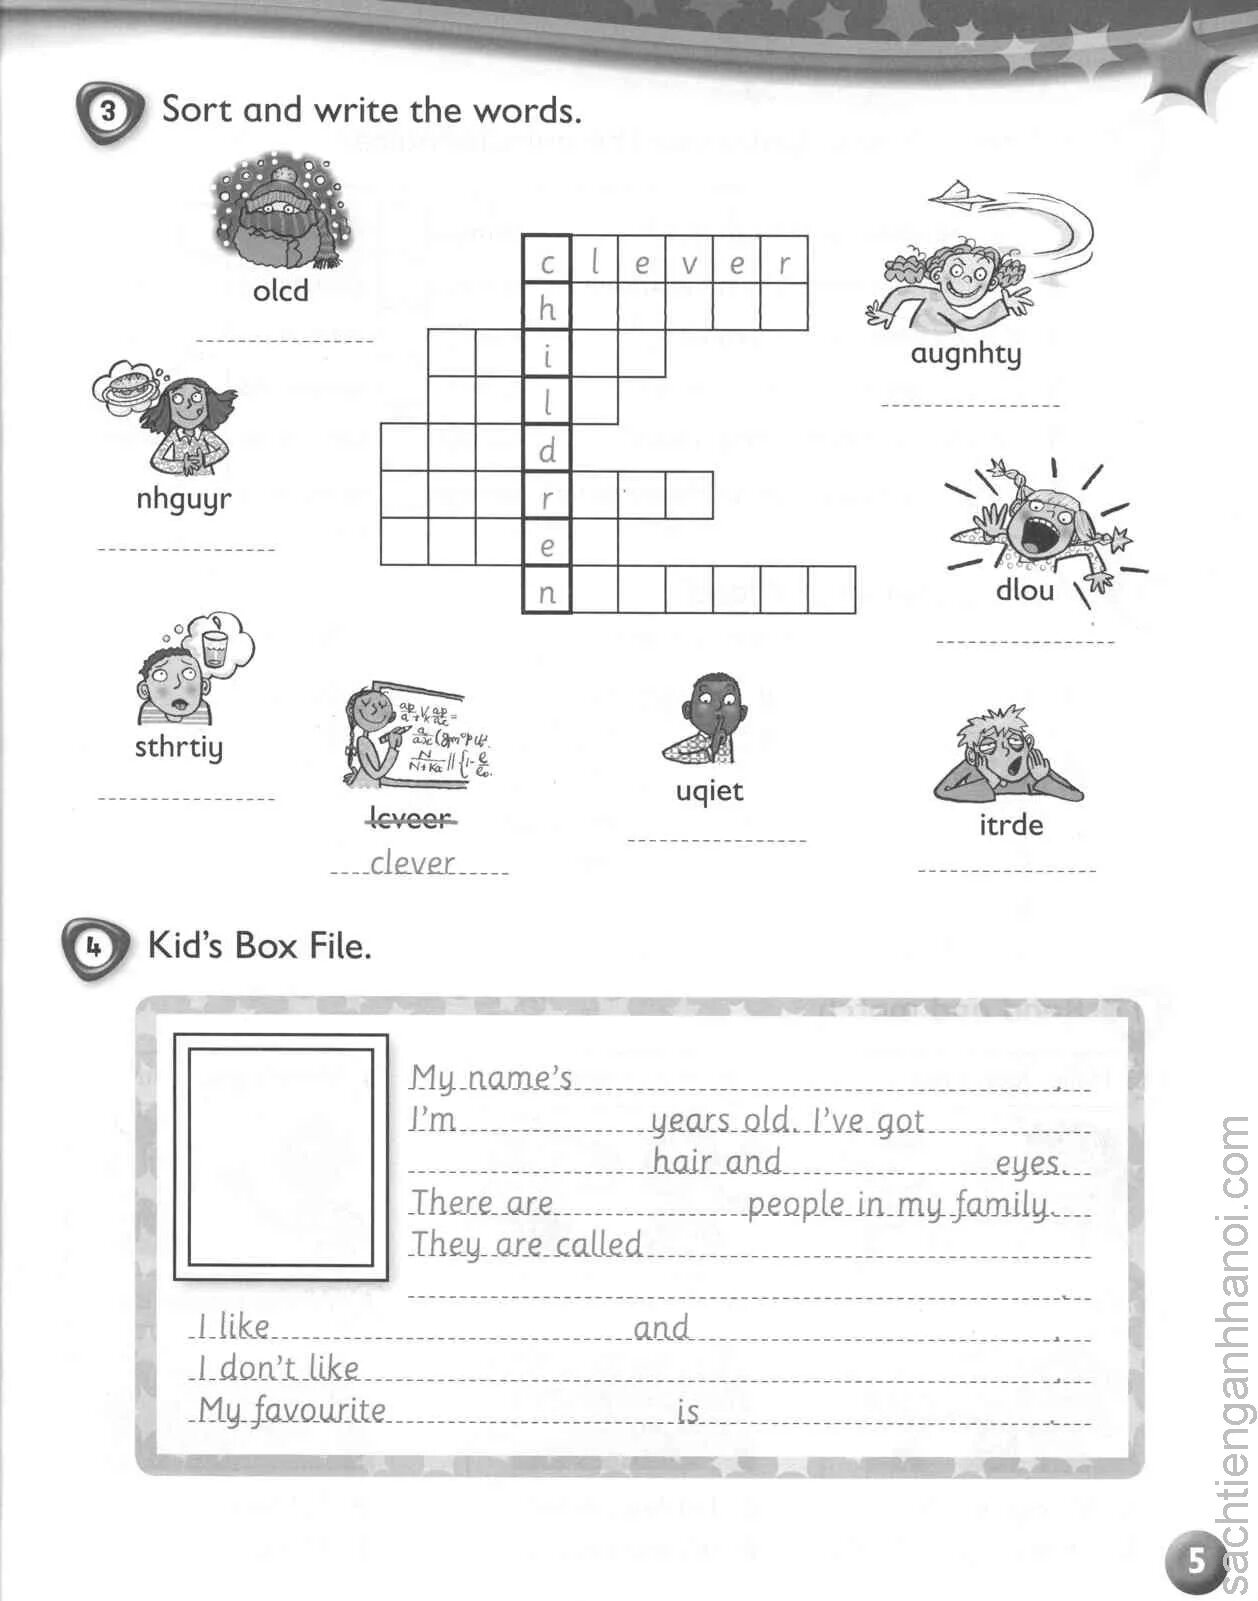 КИД бокс 2 рабочая тетрадь. Kids Box 2 activity book ответы. Kids Box 4 activity book ответы рабочая тетрадь. Kids Box 4 activity book ответы. Kids box activity book ответы